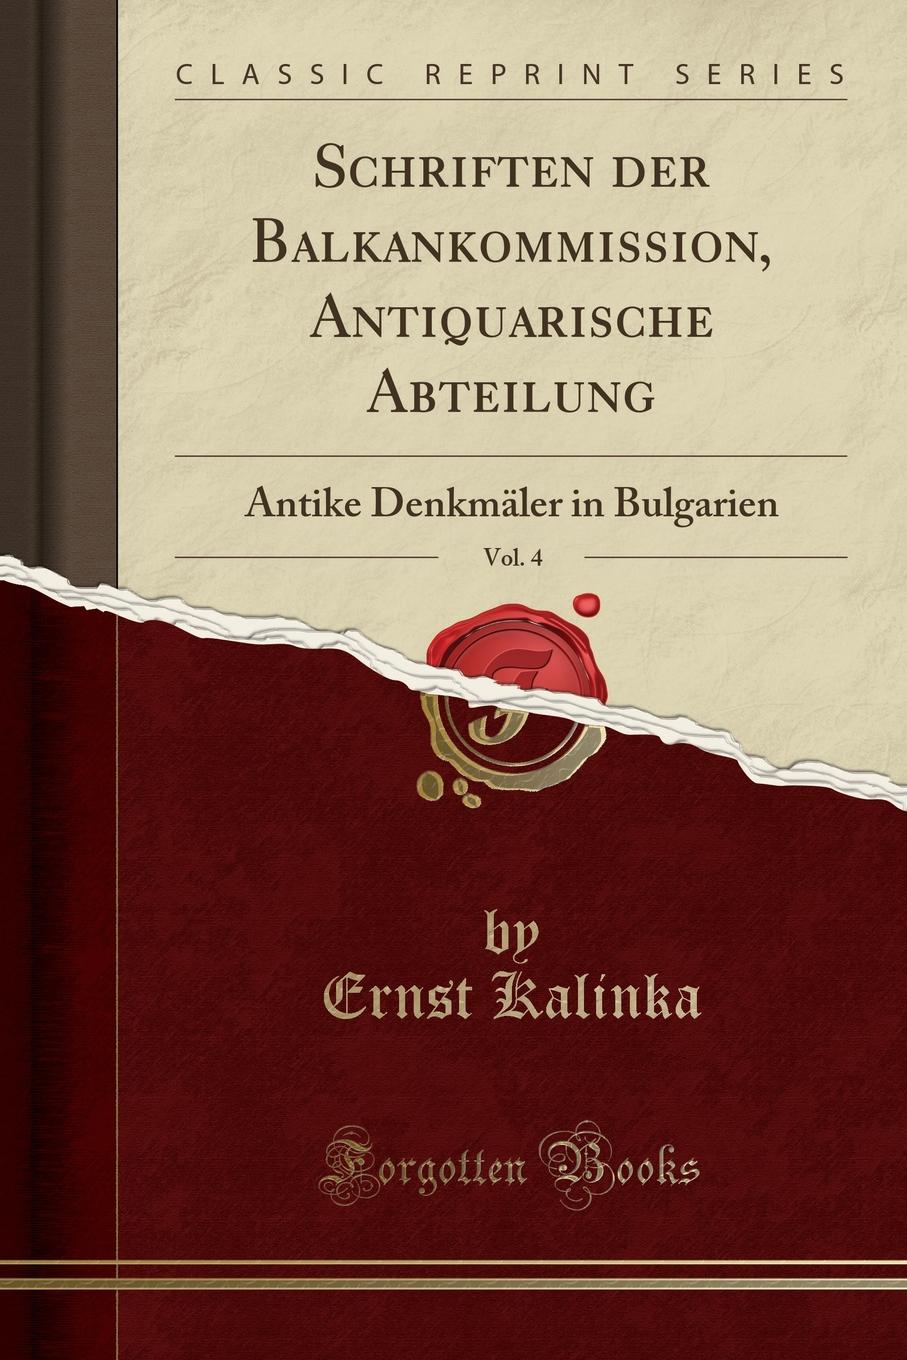 Ernst Kalinka Schriften der Balkankommission, Antiquarische Abteilung, Vol. 4. Antike Denkmaler in Bulgarien (Classic Reprint)